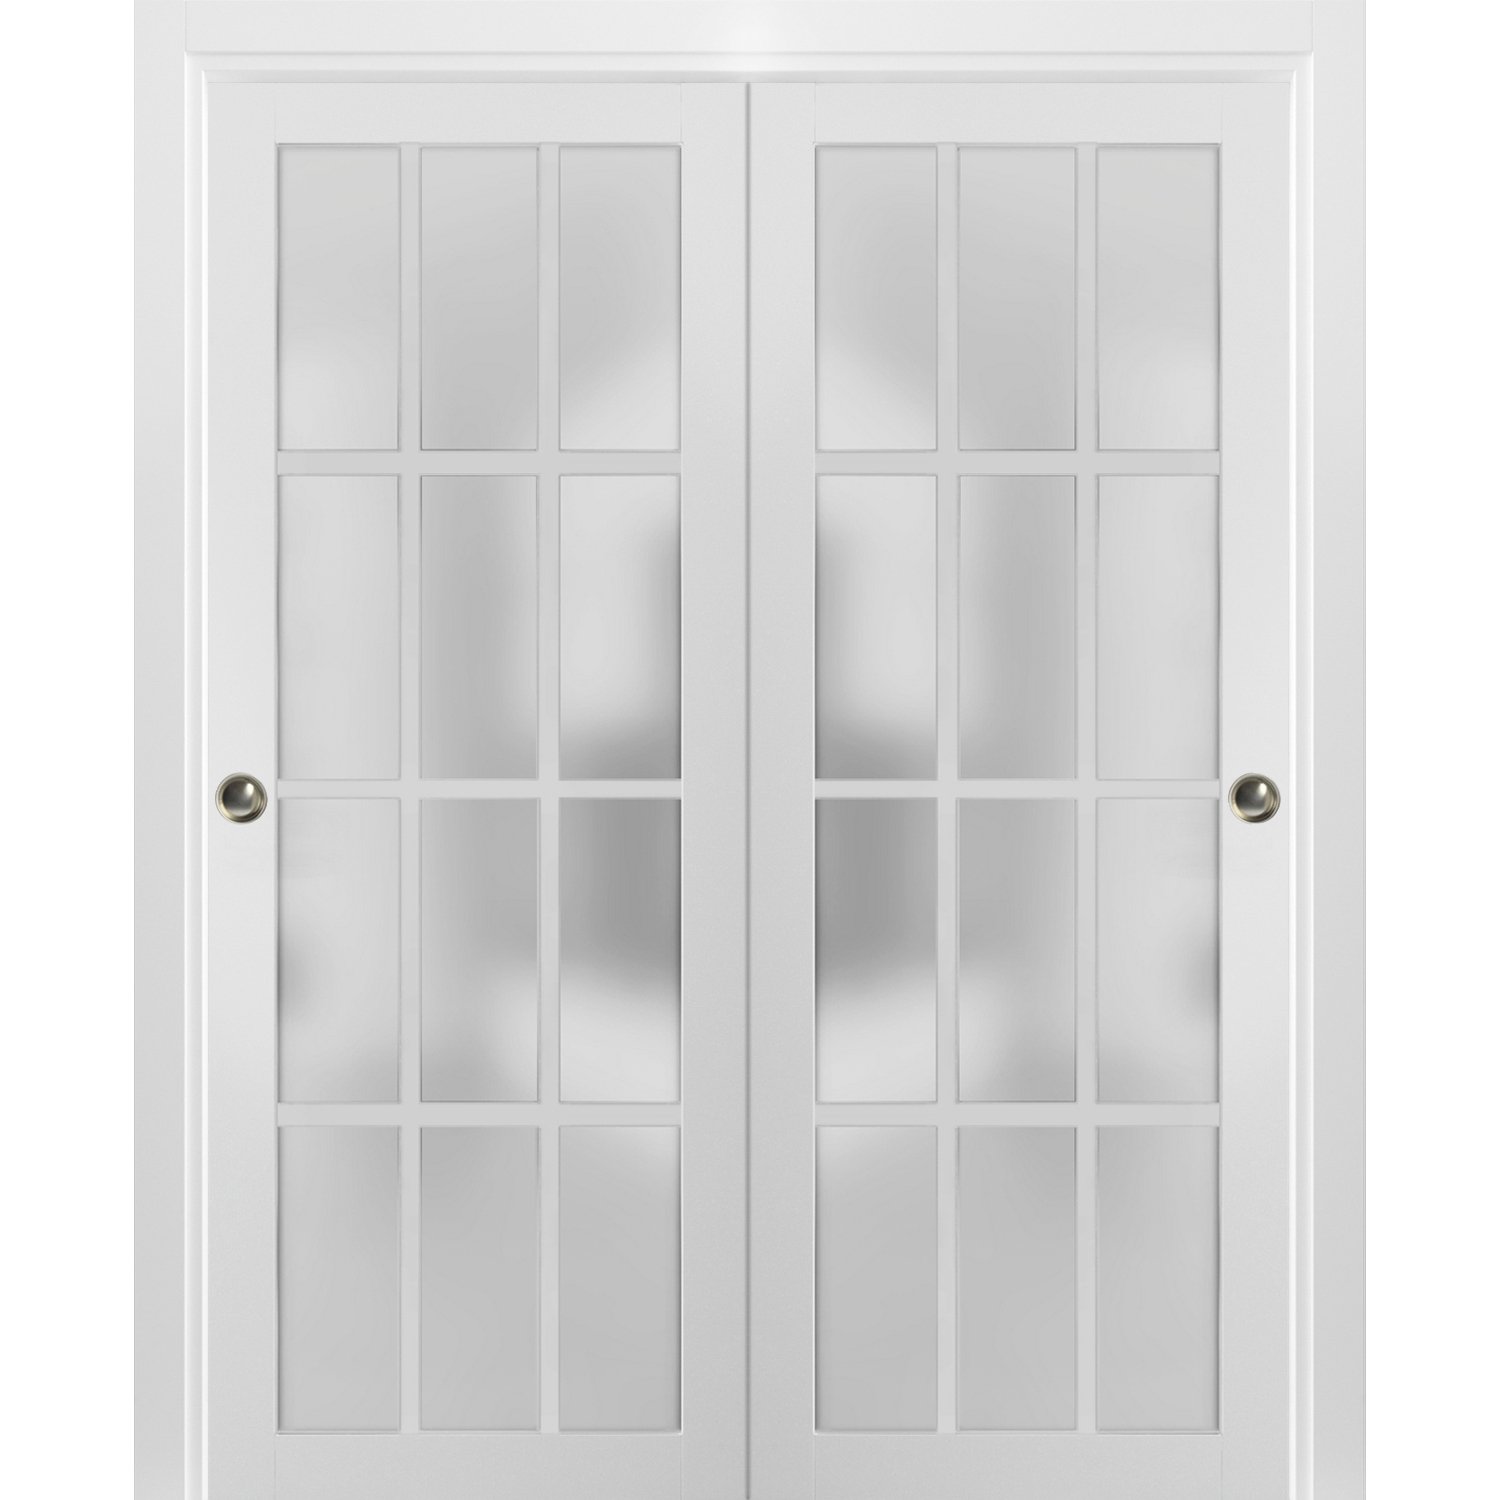 Sliding Closet 12 Lites Bypass Doors | Felicia 3312 | Sturdy Rails Moldings Trims Hardware Set | Wood Solid Bedroom Wardrobe Doors -84